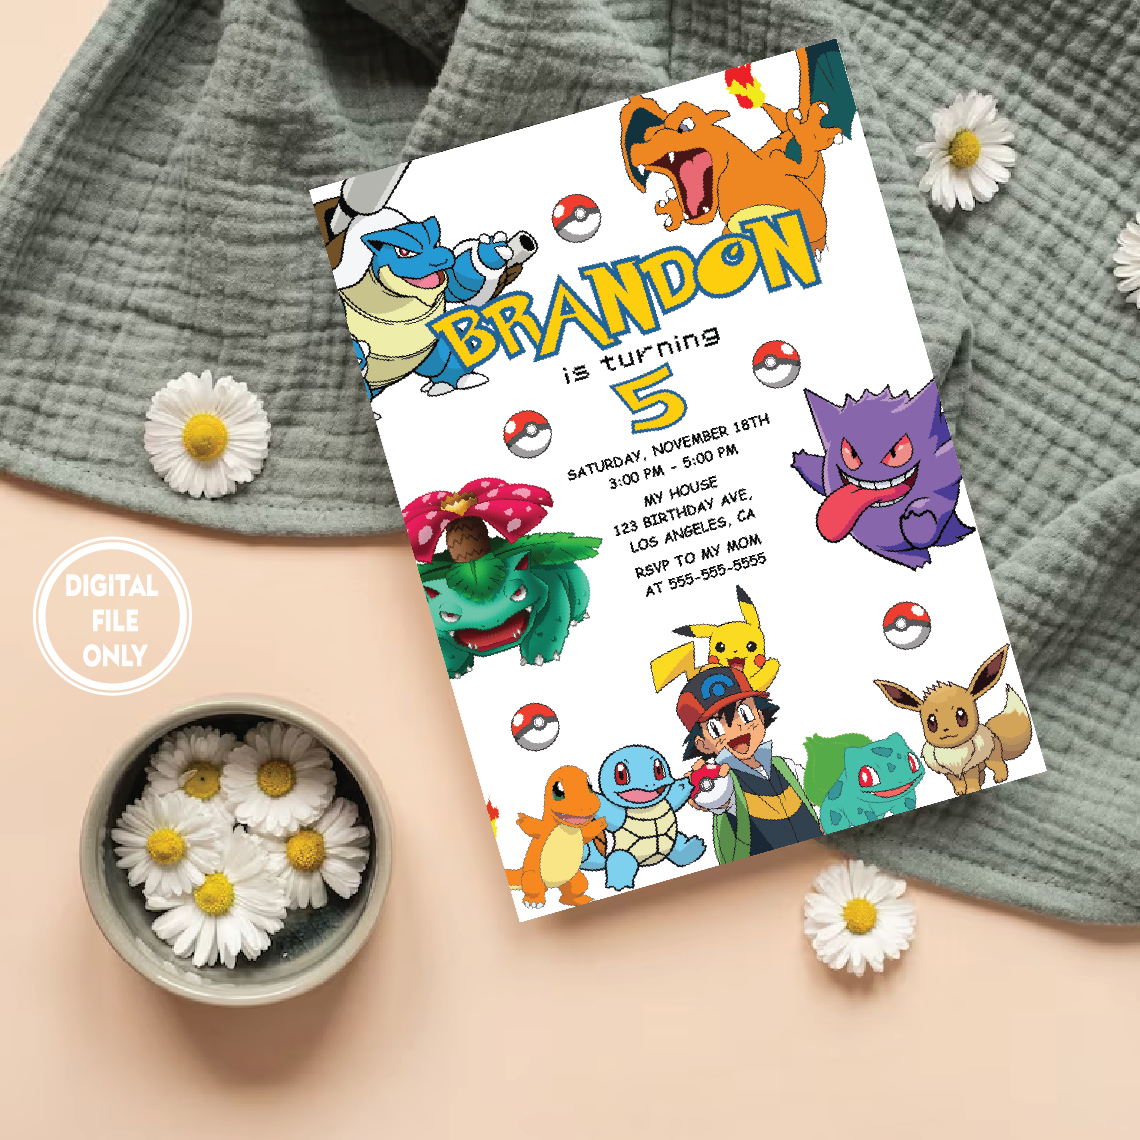 Personalized File Pokemone Birthday Invitation Digital, Pokemon Evite, Printable Download, pikachu invite Pokemon birthday supplies PNG File Only